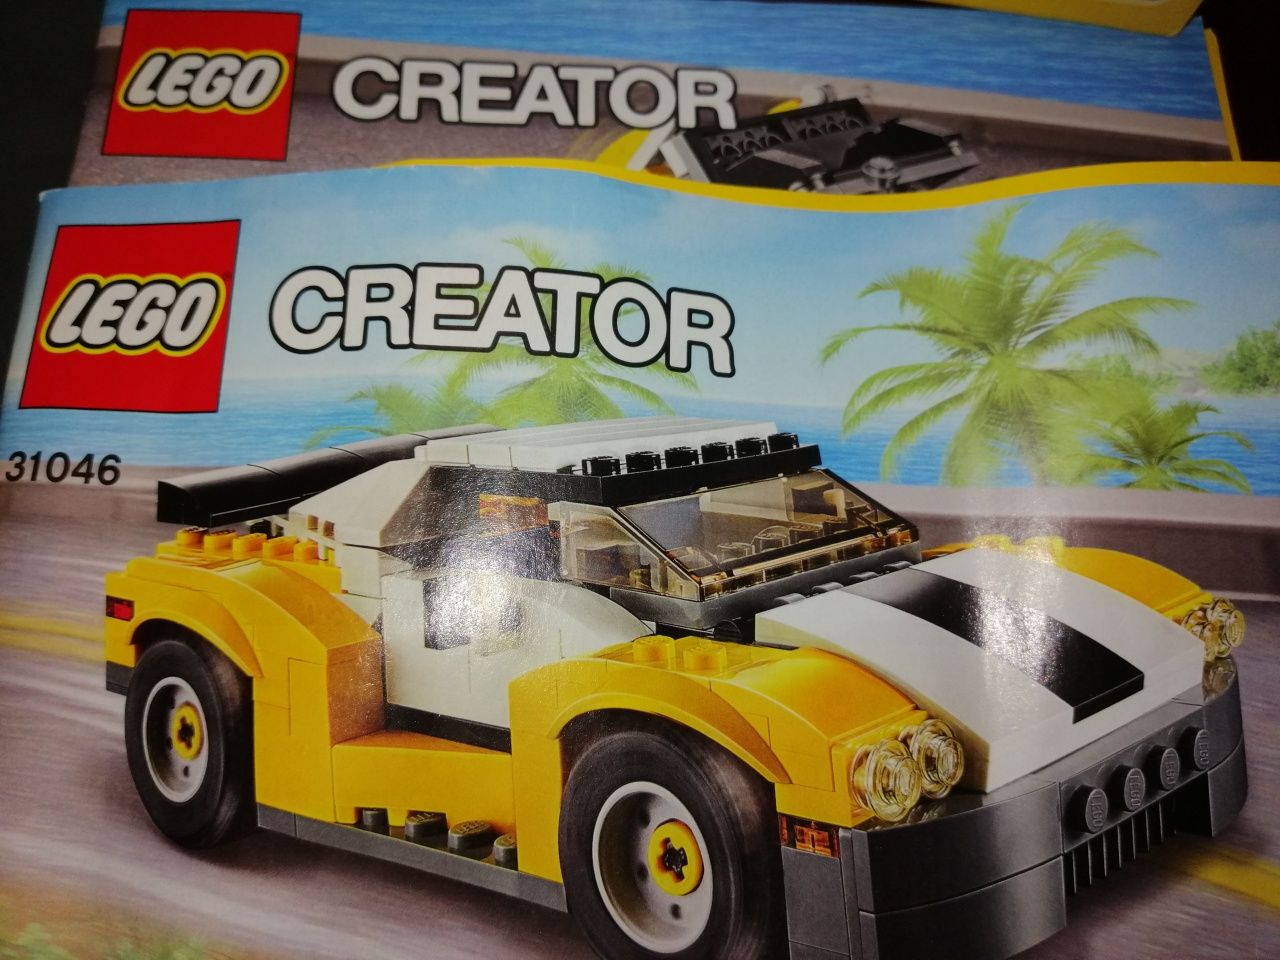 Lego creator 31046